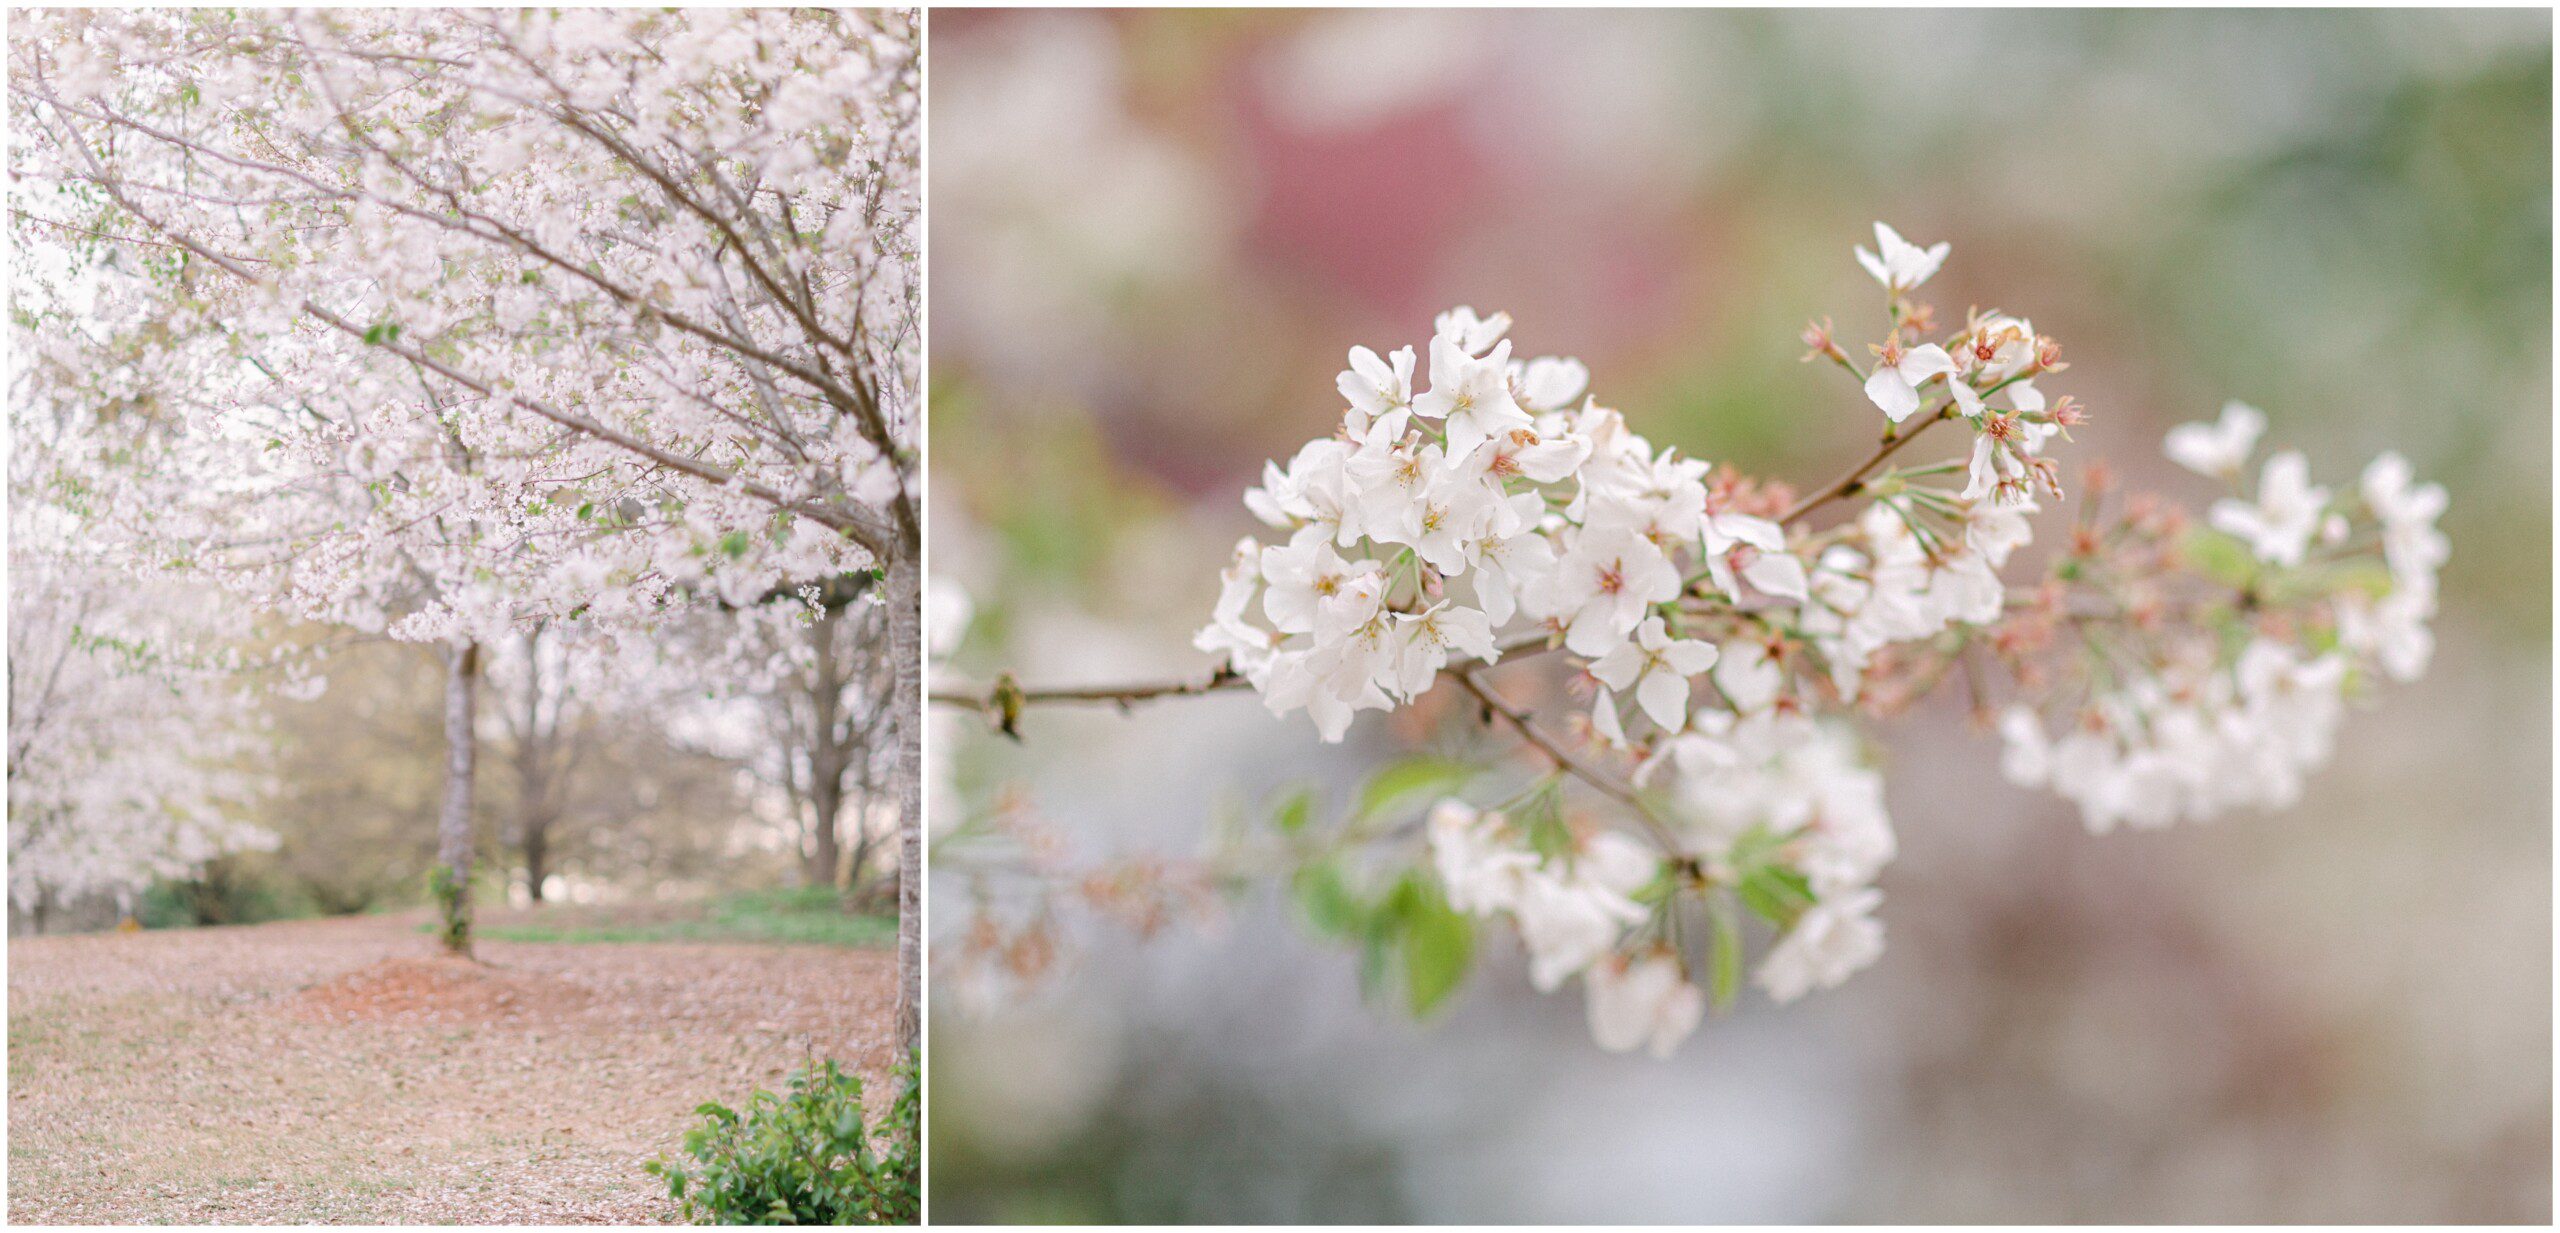 Photos of cherry blossoms